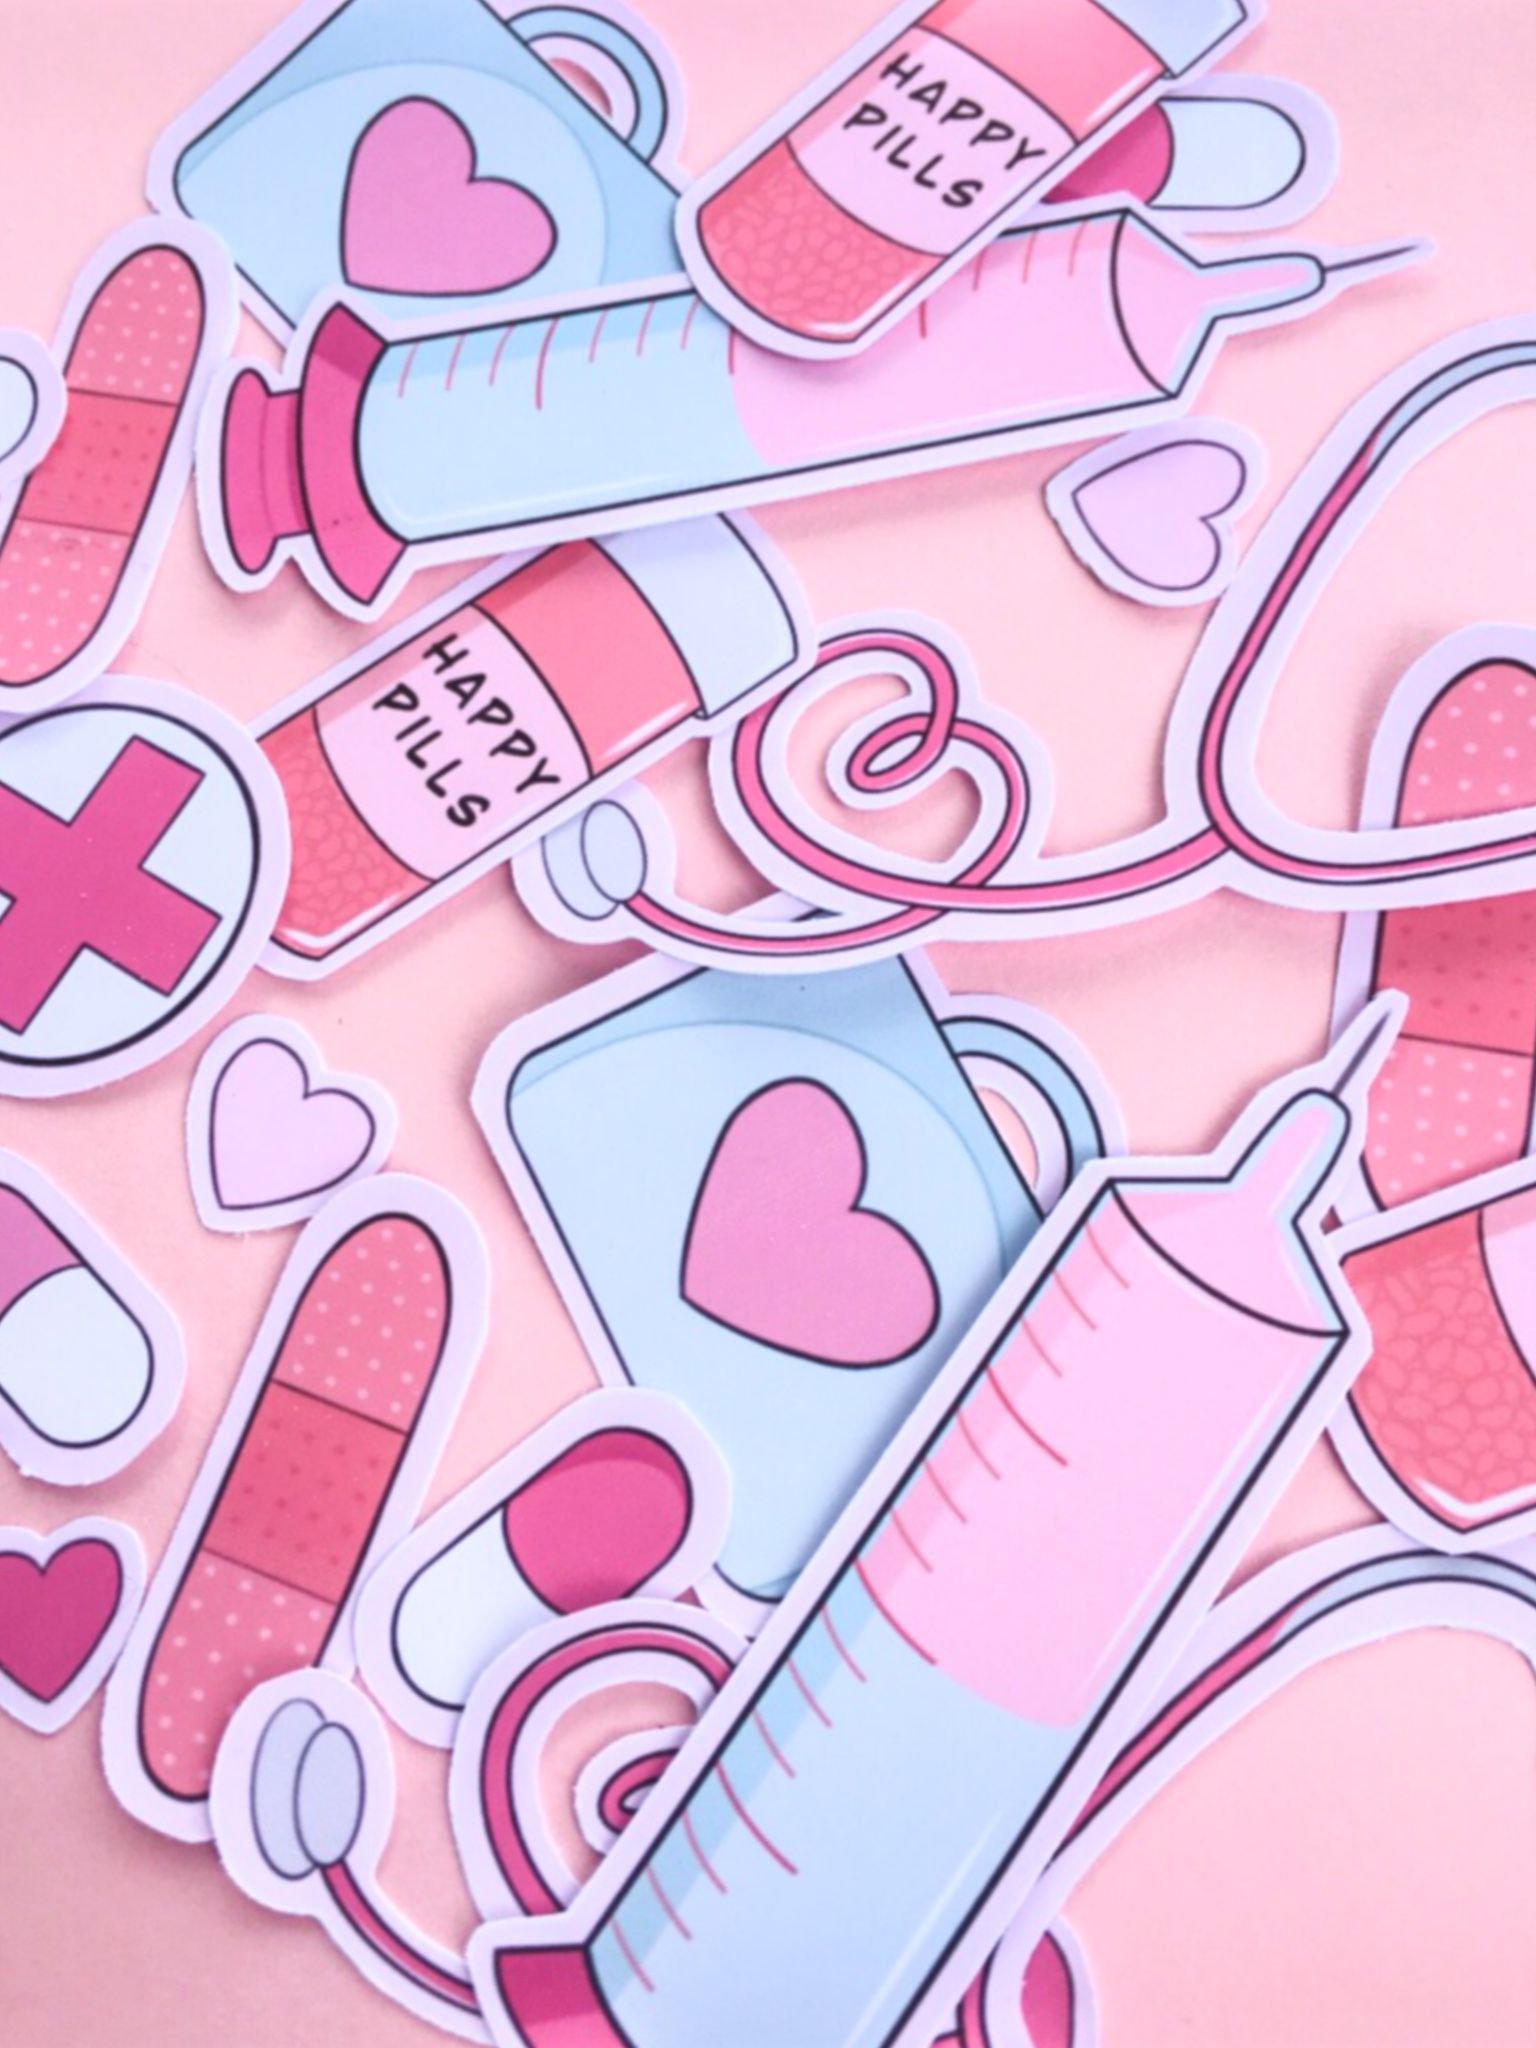 Cute Medical Themed Self Care Sticker Pack. Etsy. Medical wallpaper, Medical theme, Nurse art